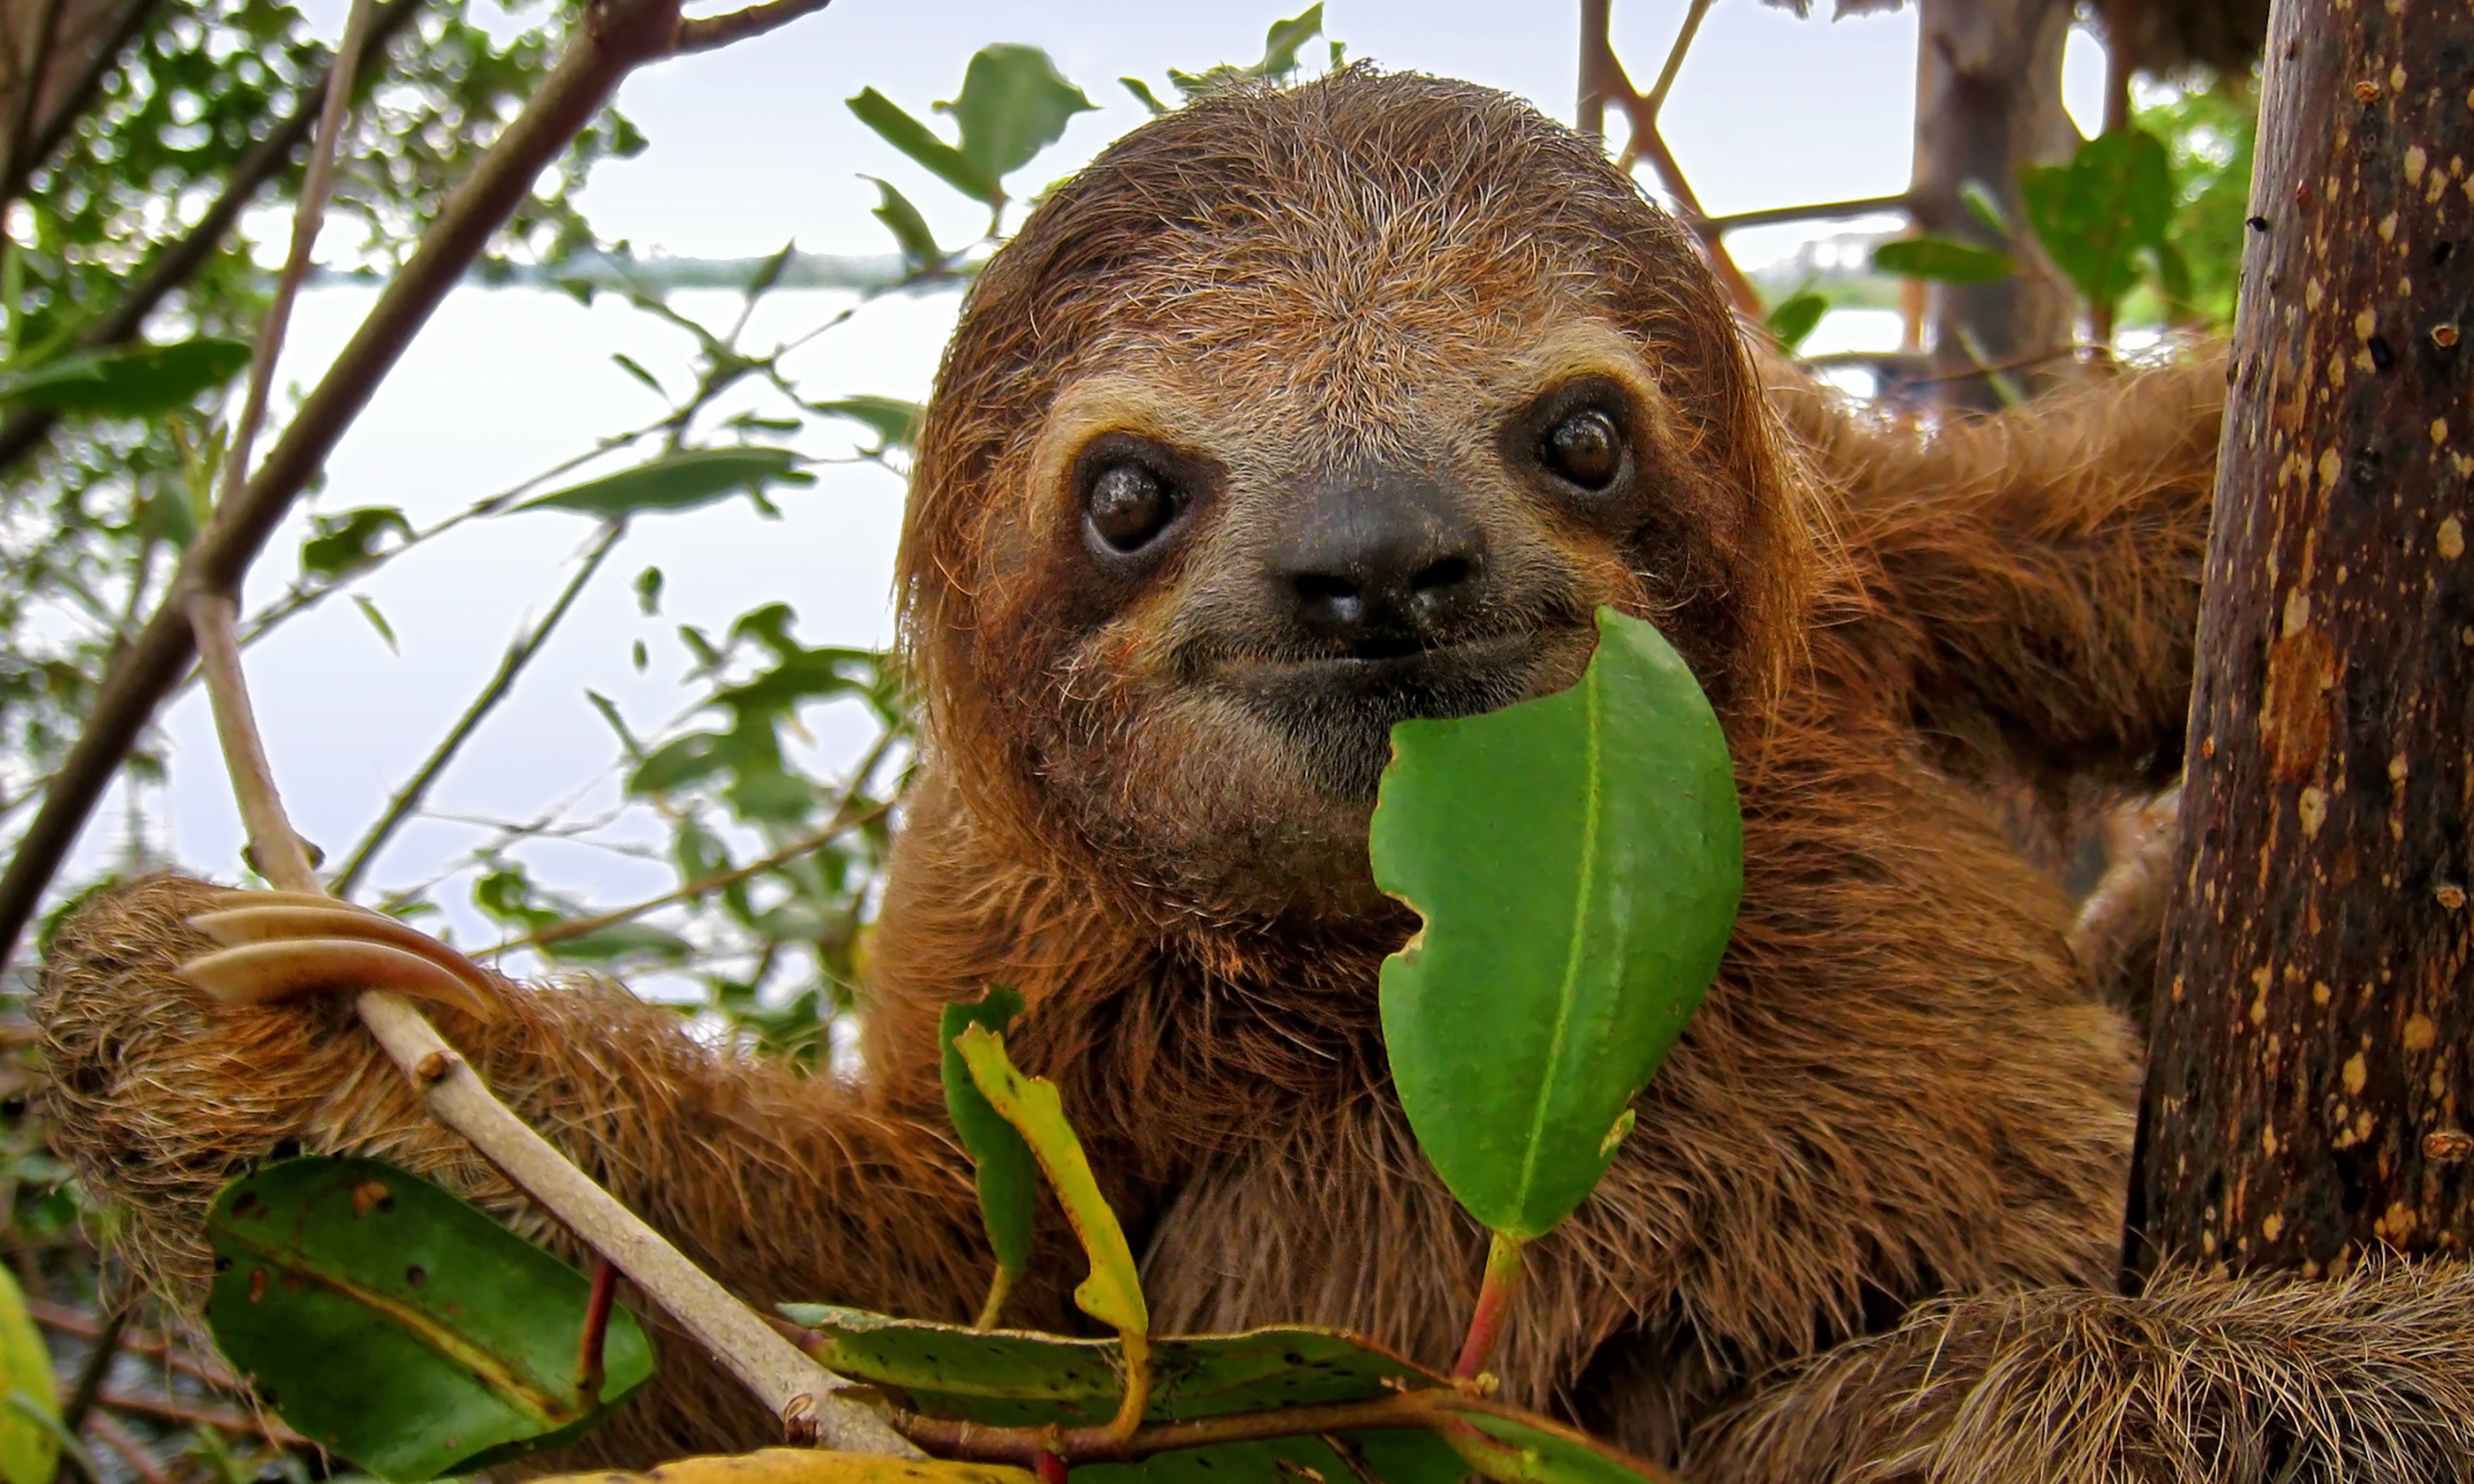 Costa Rican sloth (shutterstock.com. See credit below)